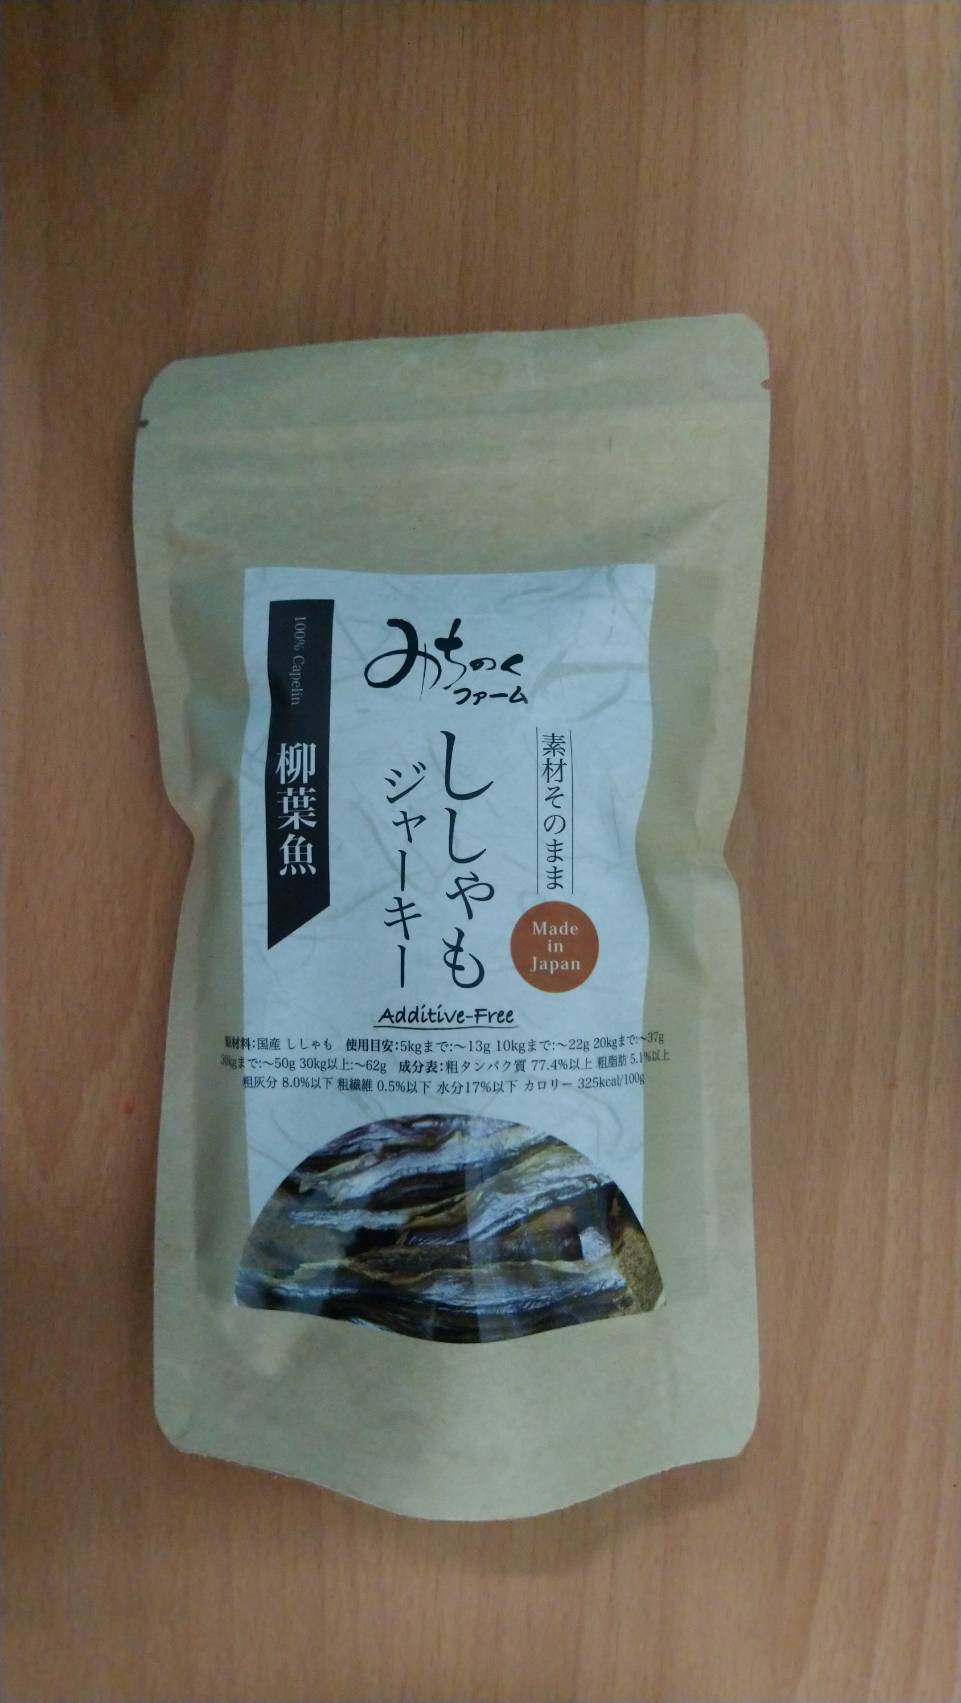 Michinoku柳葉魚
